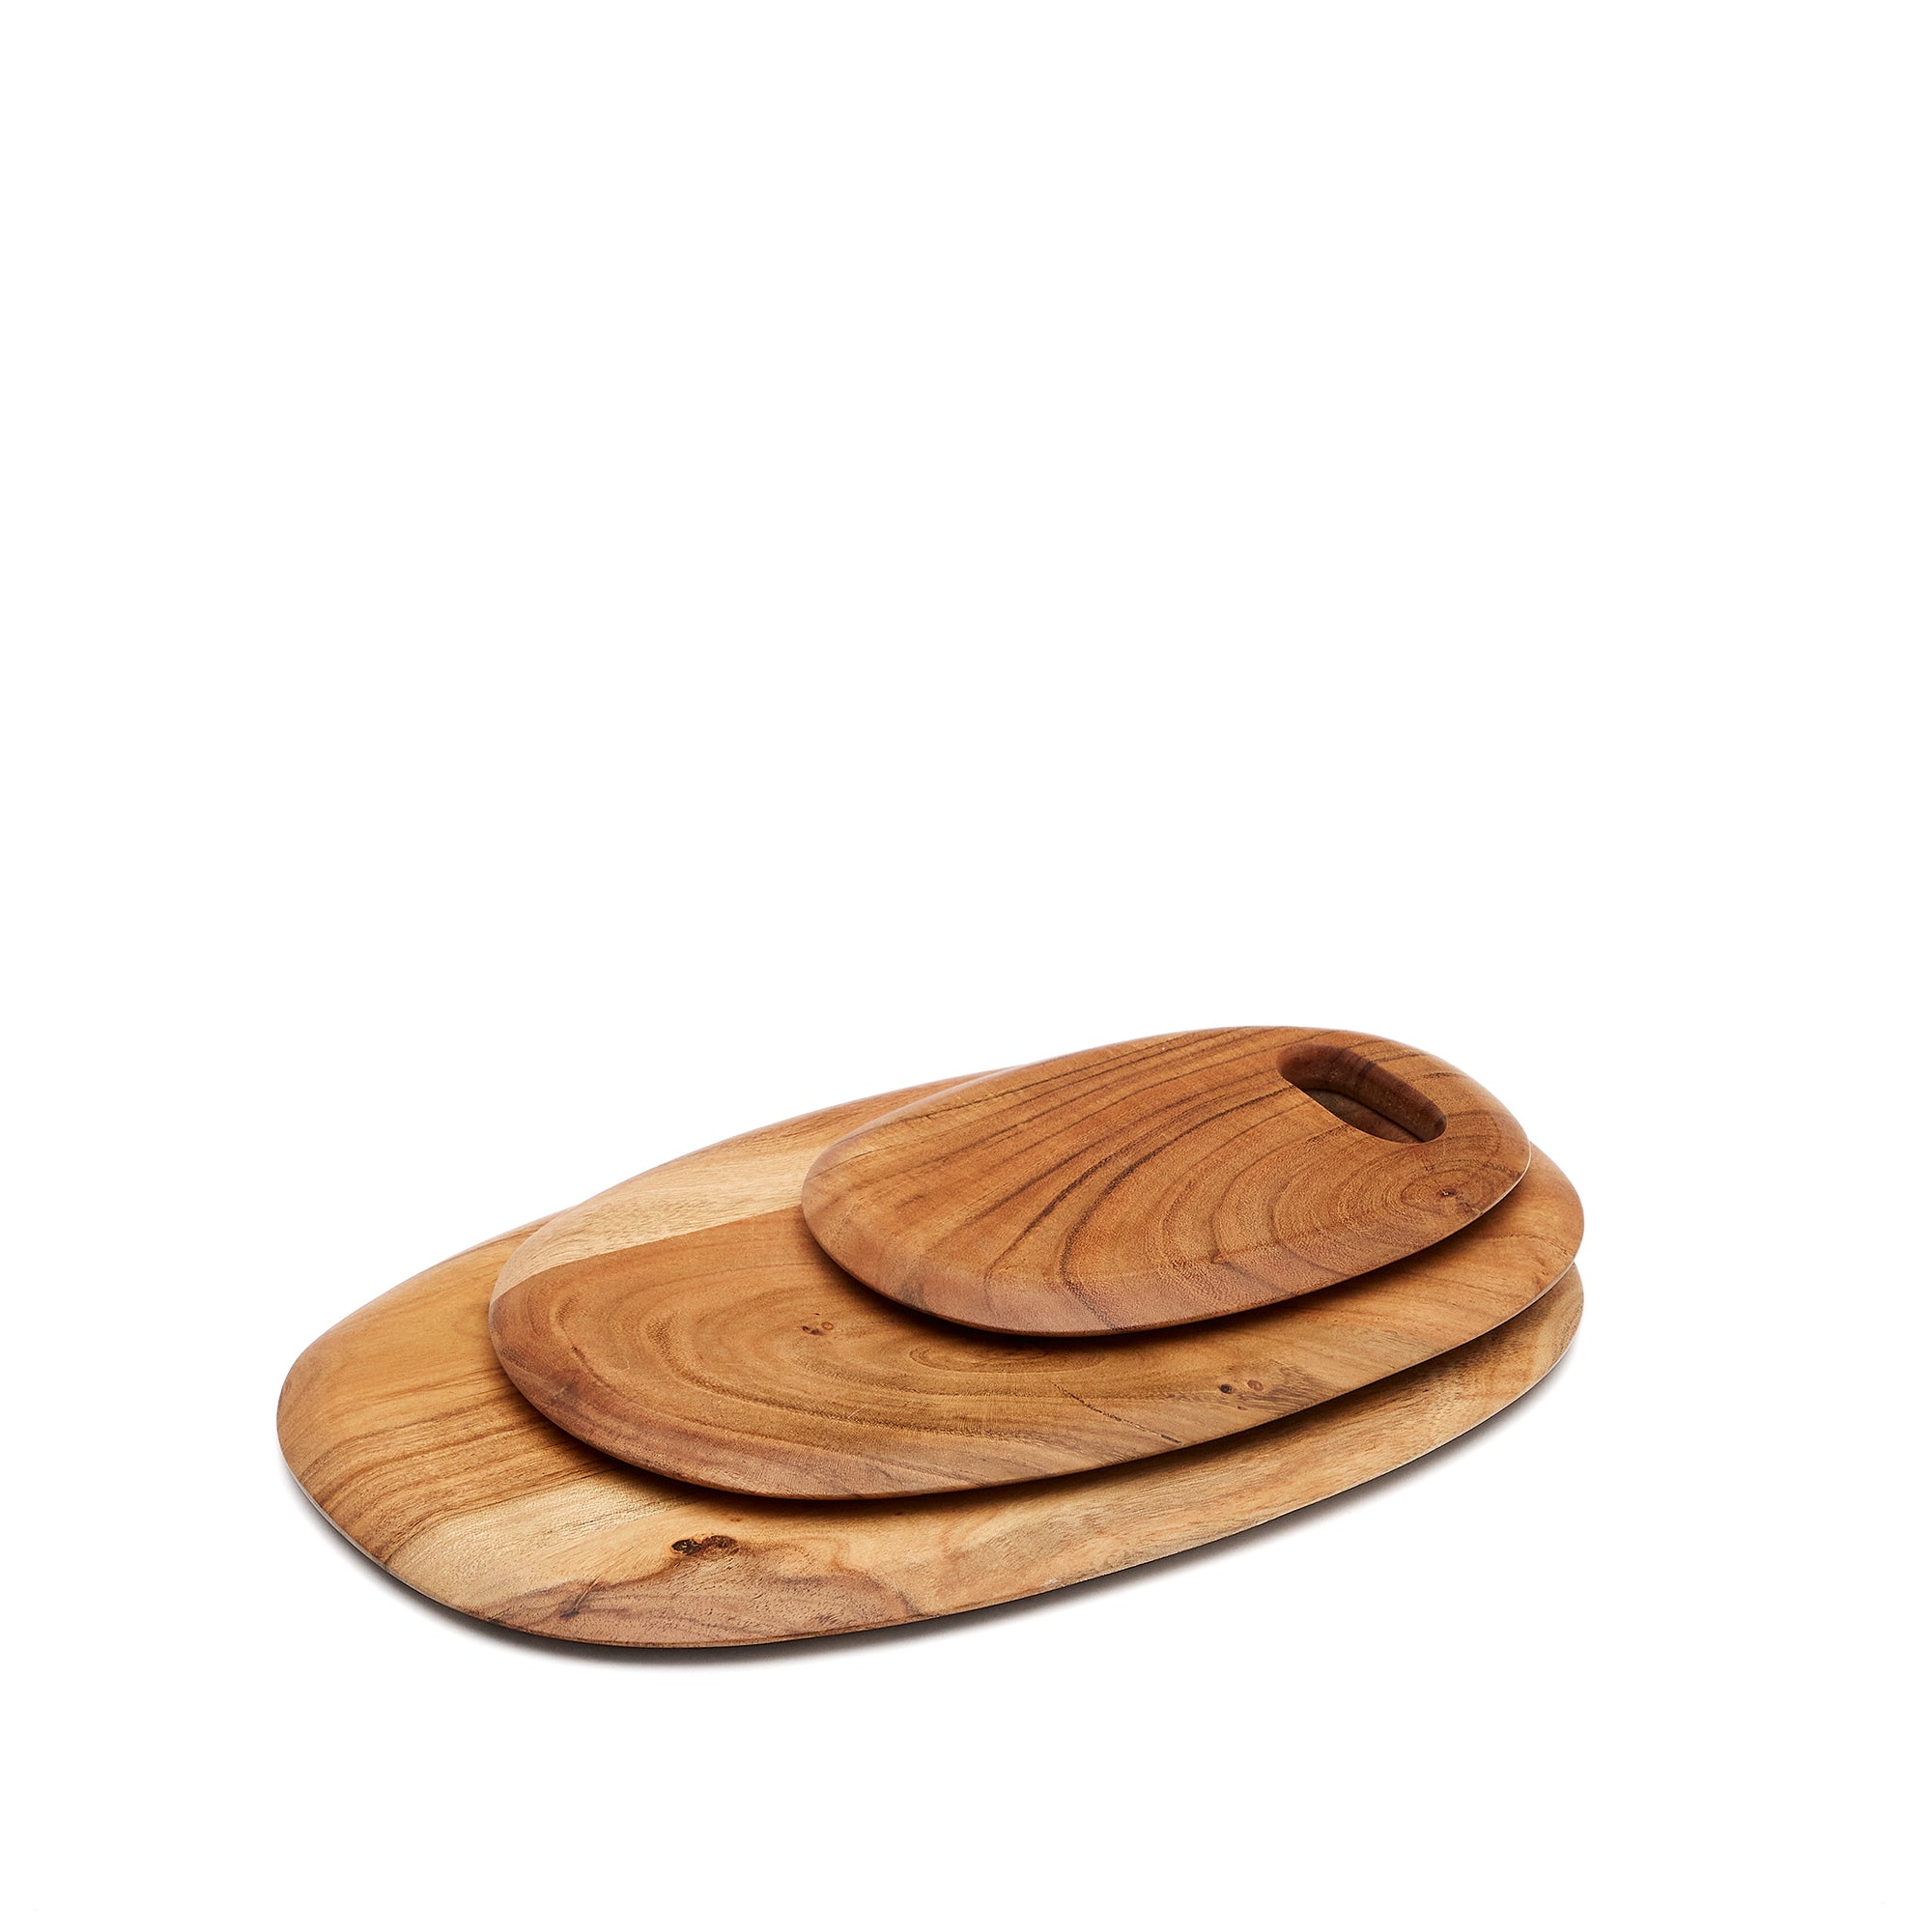 Llubi set of 3 solid acacia wood serving boards